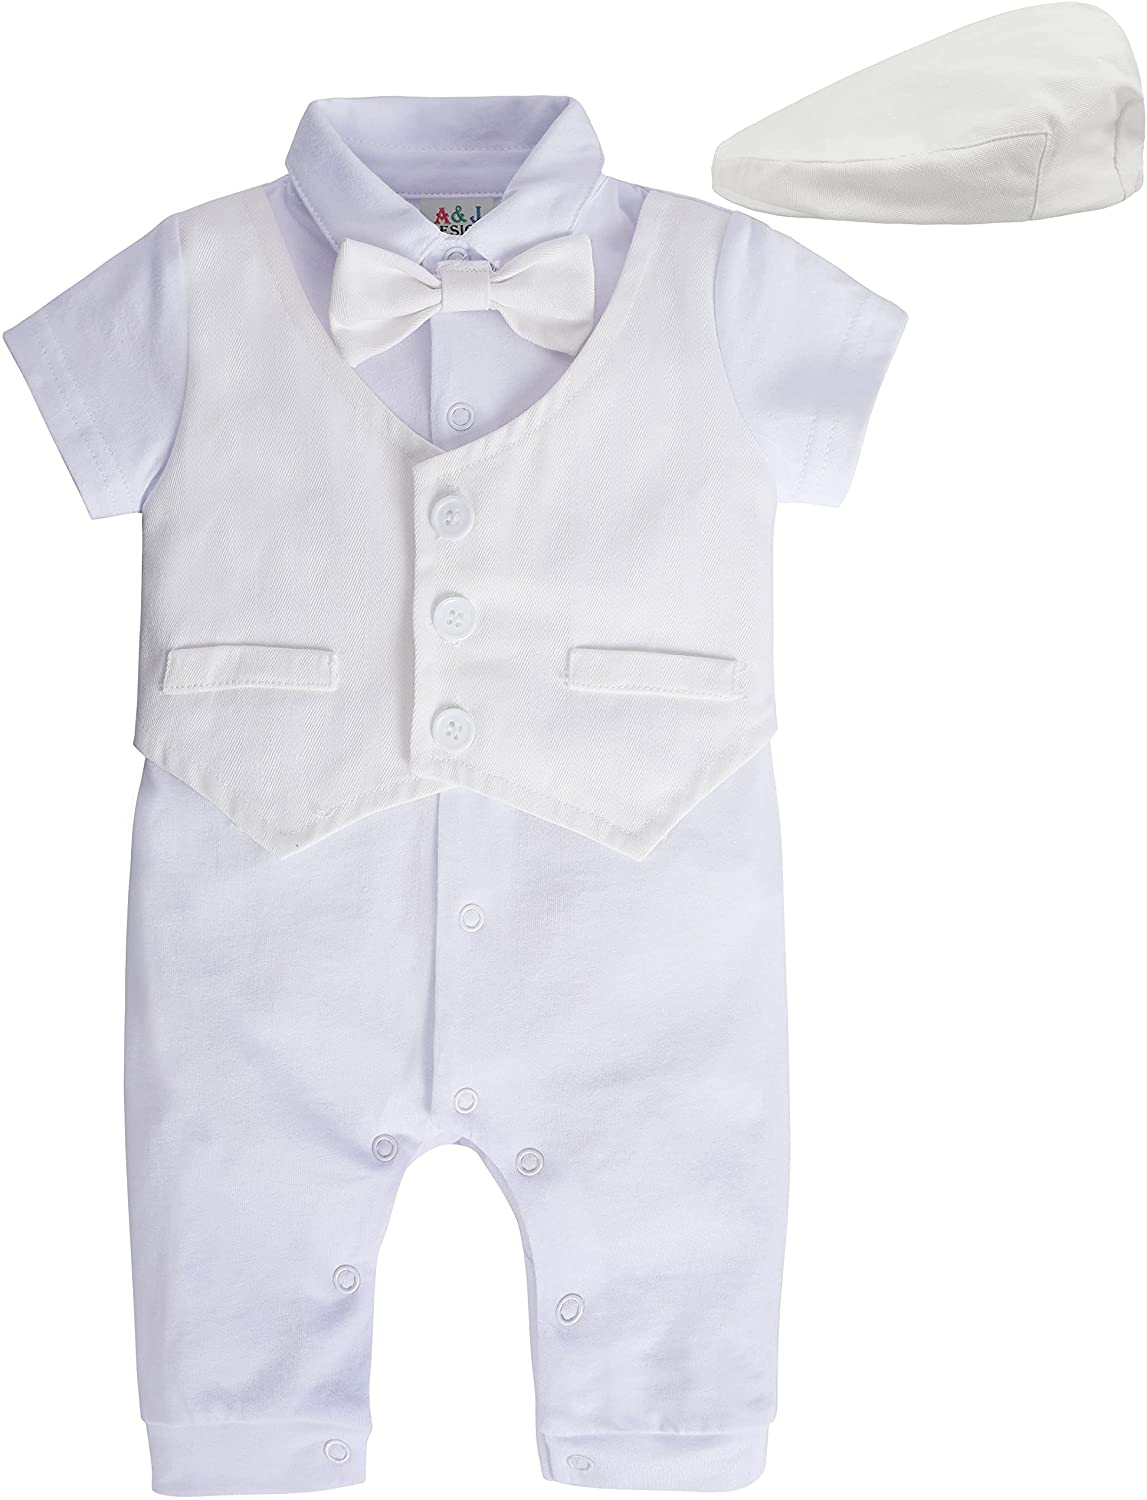 A&J DESIGN Baby Boy Christening Outfit Baptism Clothing White Tuxedo Short Sleeve Romper